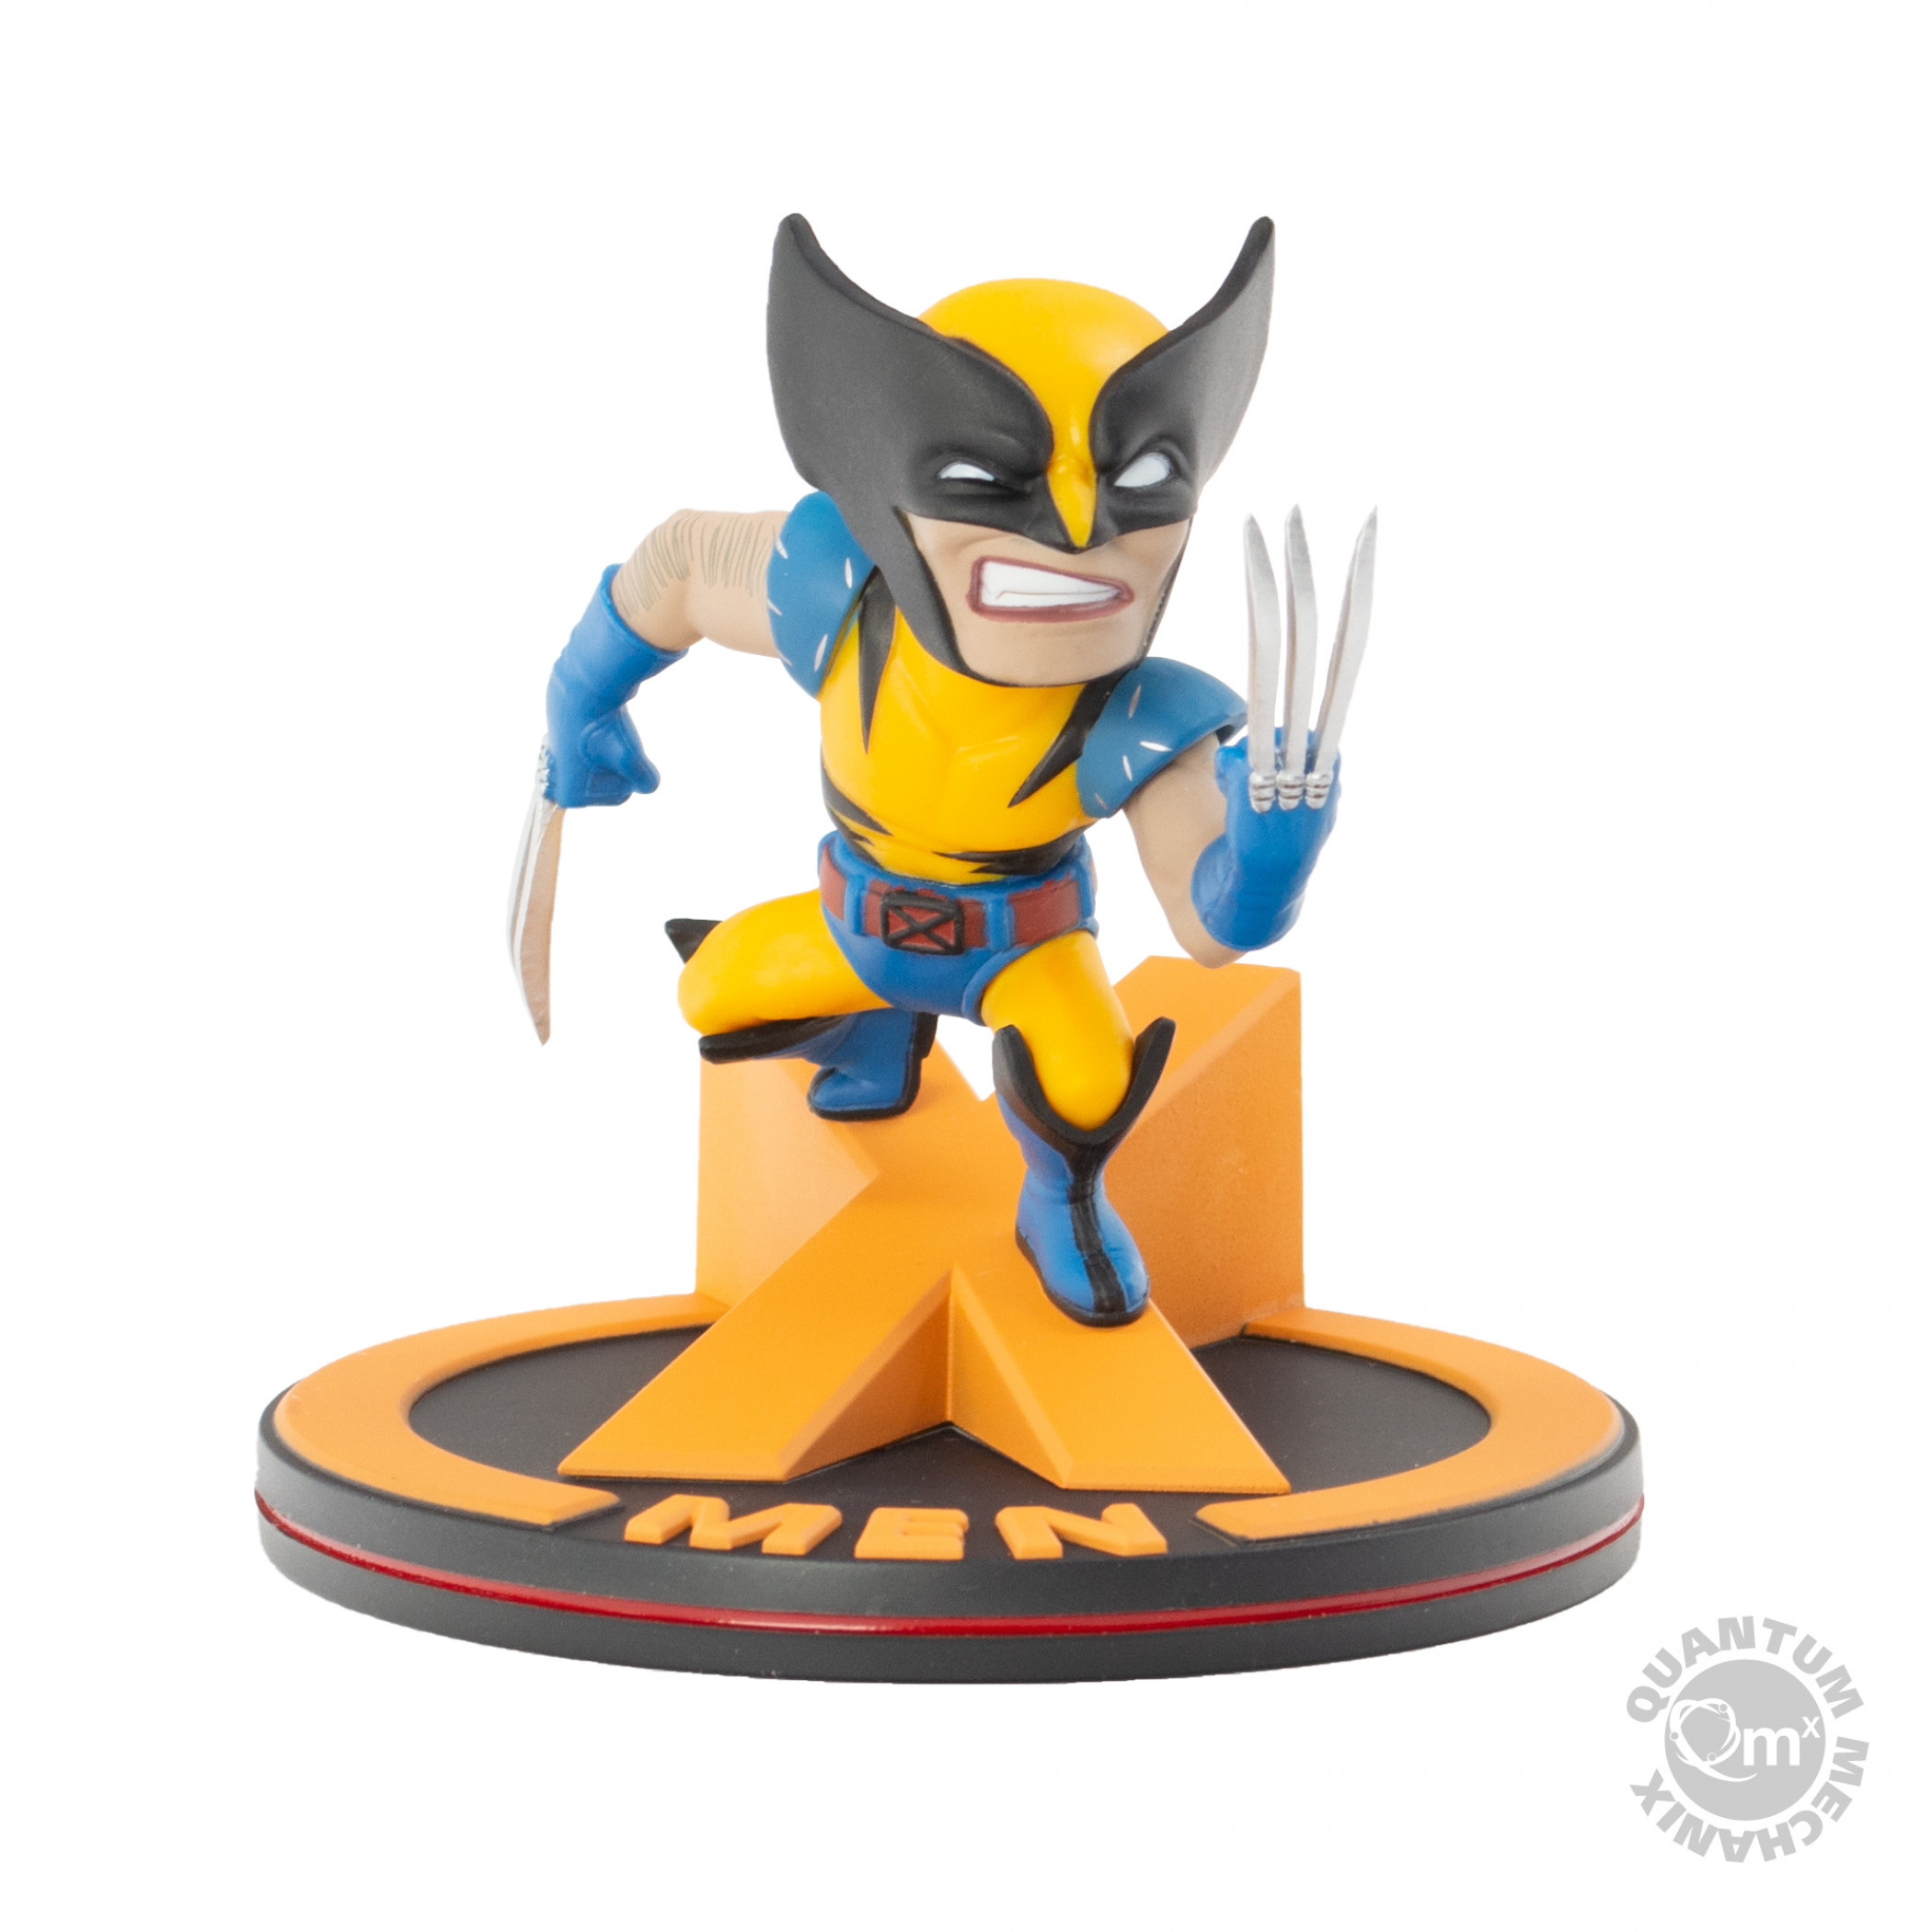 Marvel Comics X-Men Wolverine Q-Fig Figurine